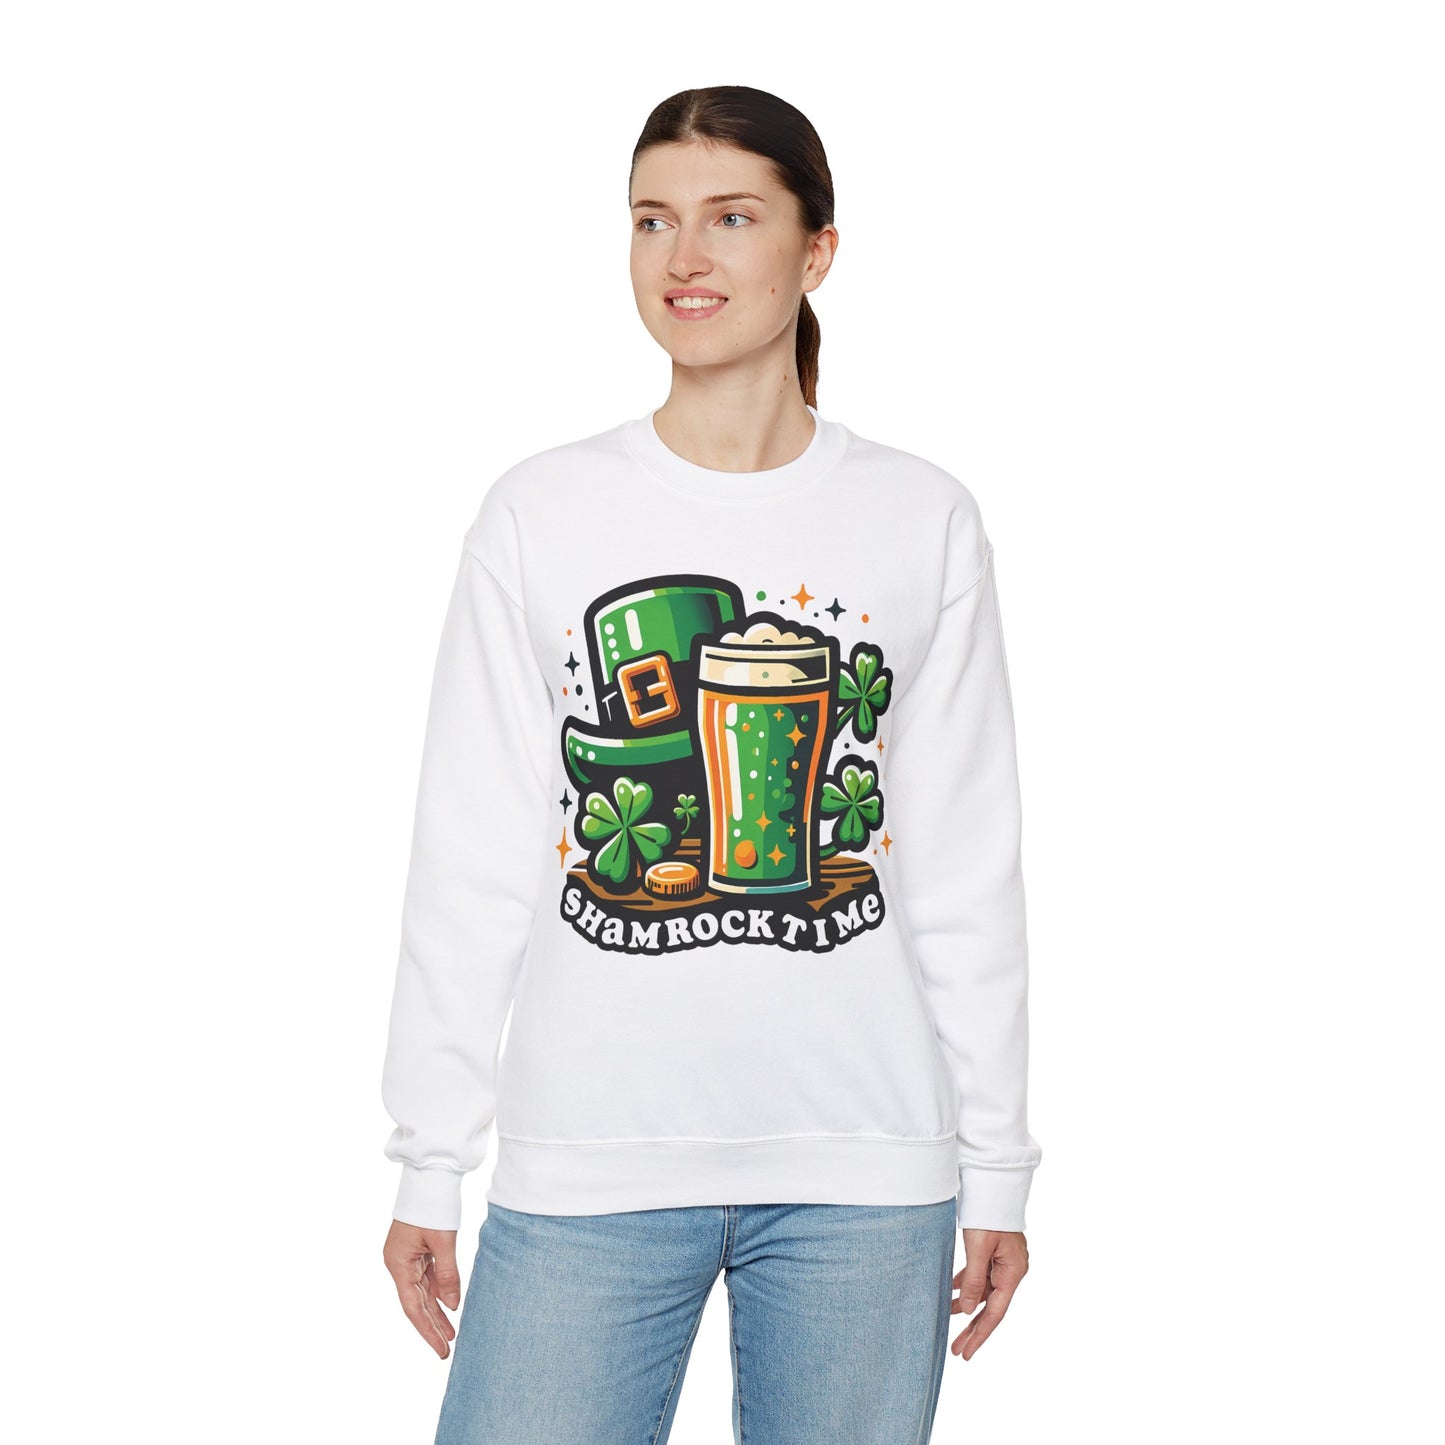 Shamrock Time Sweatshirt, St. Patrick's Day Crewneck, Funny Lucky Beer Drinking Shirt, Good Craic